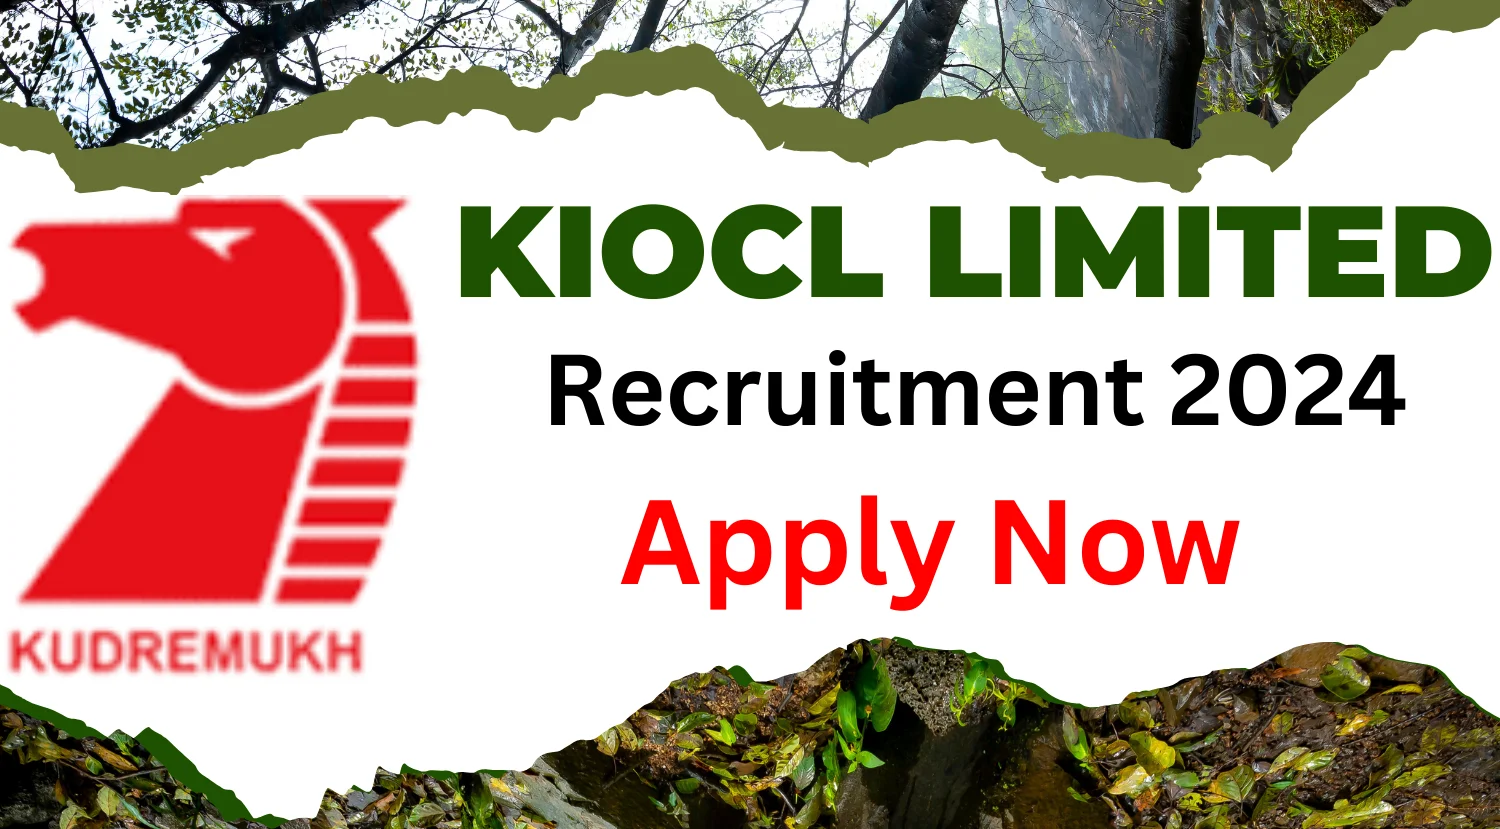 Kiocl Limited Recruitment 2024